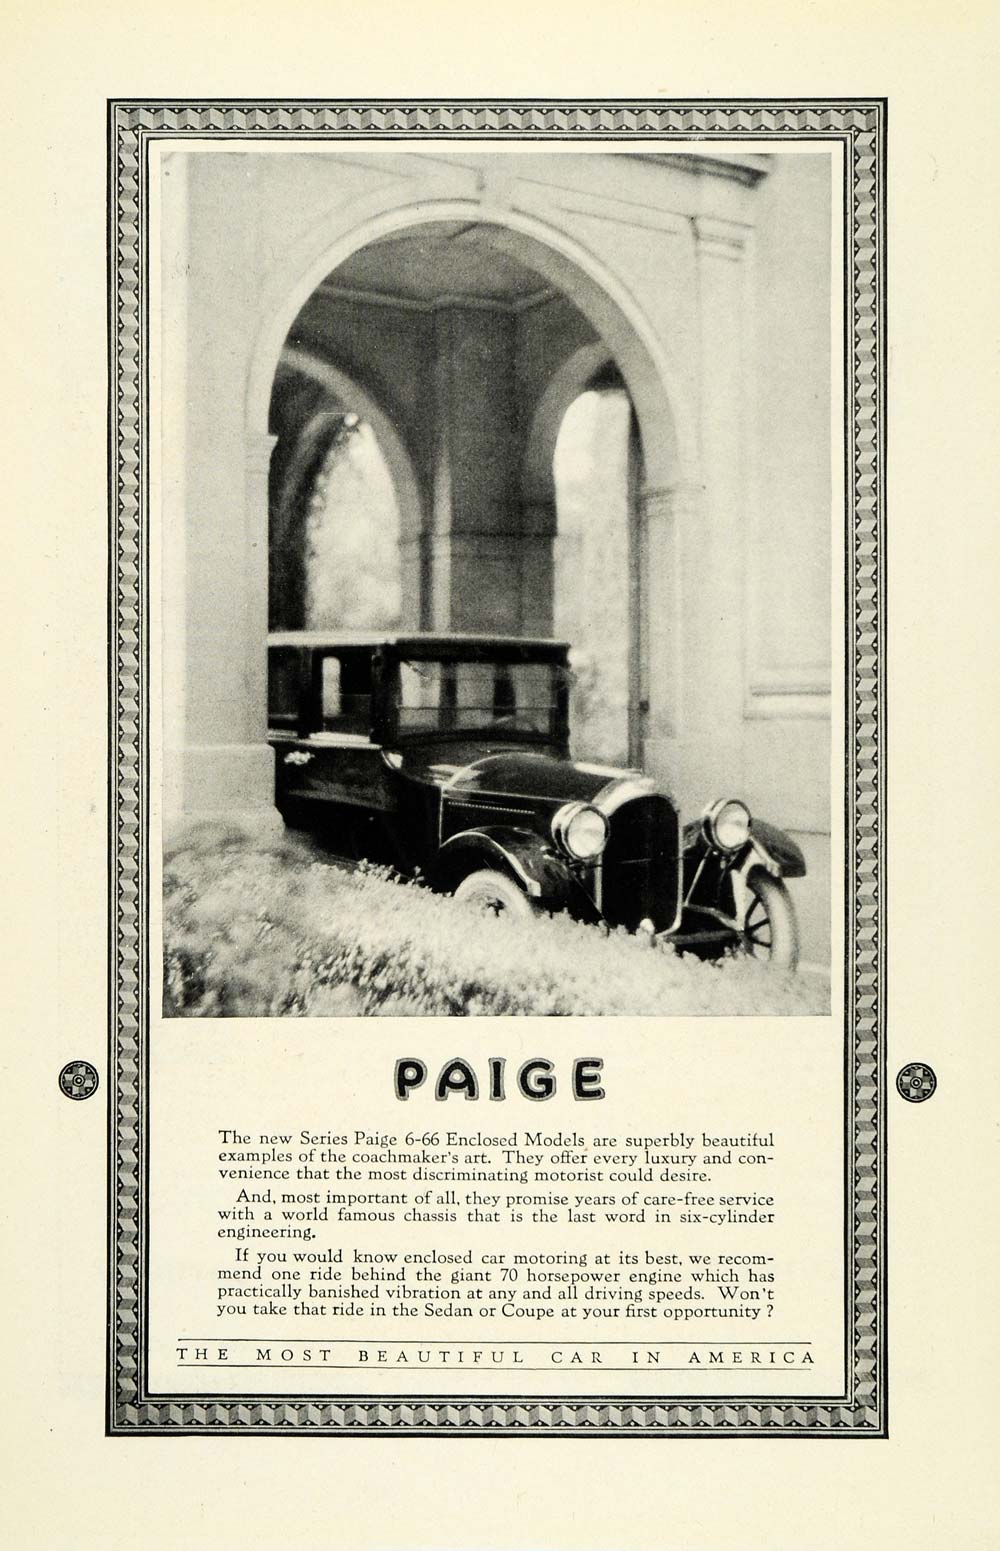 1922 Ad Paige 6-66 Model Automobile Luxury 70 Horsepower Engine Vintage NGM1